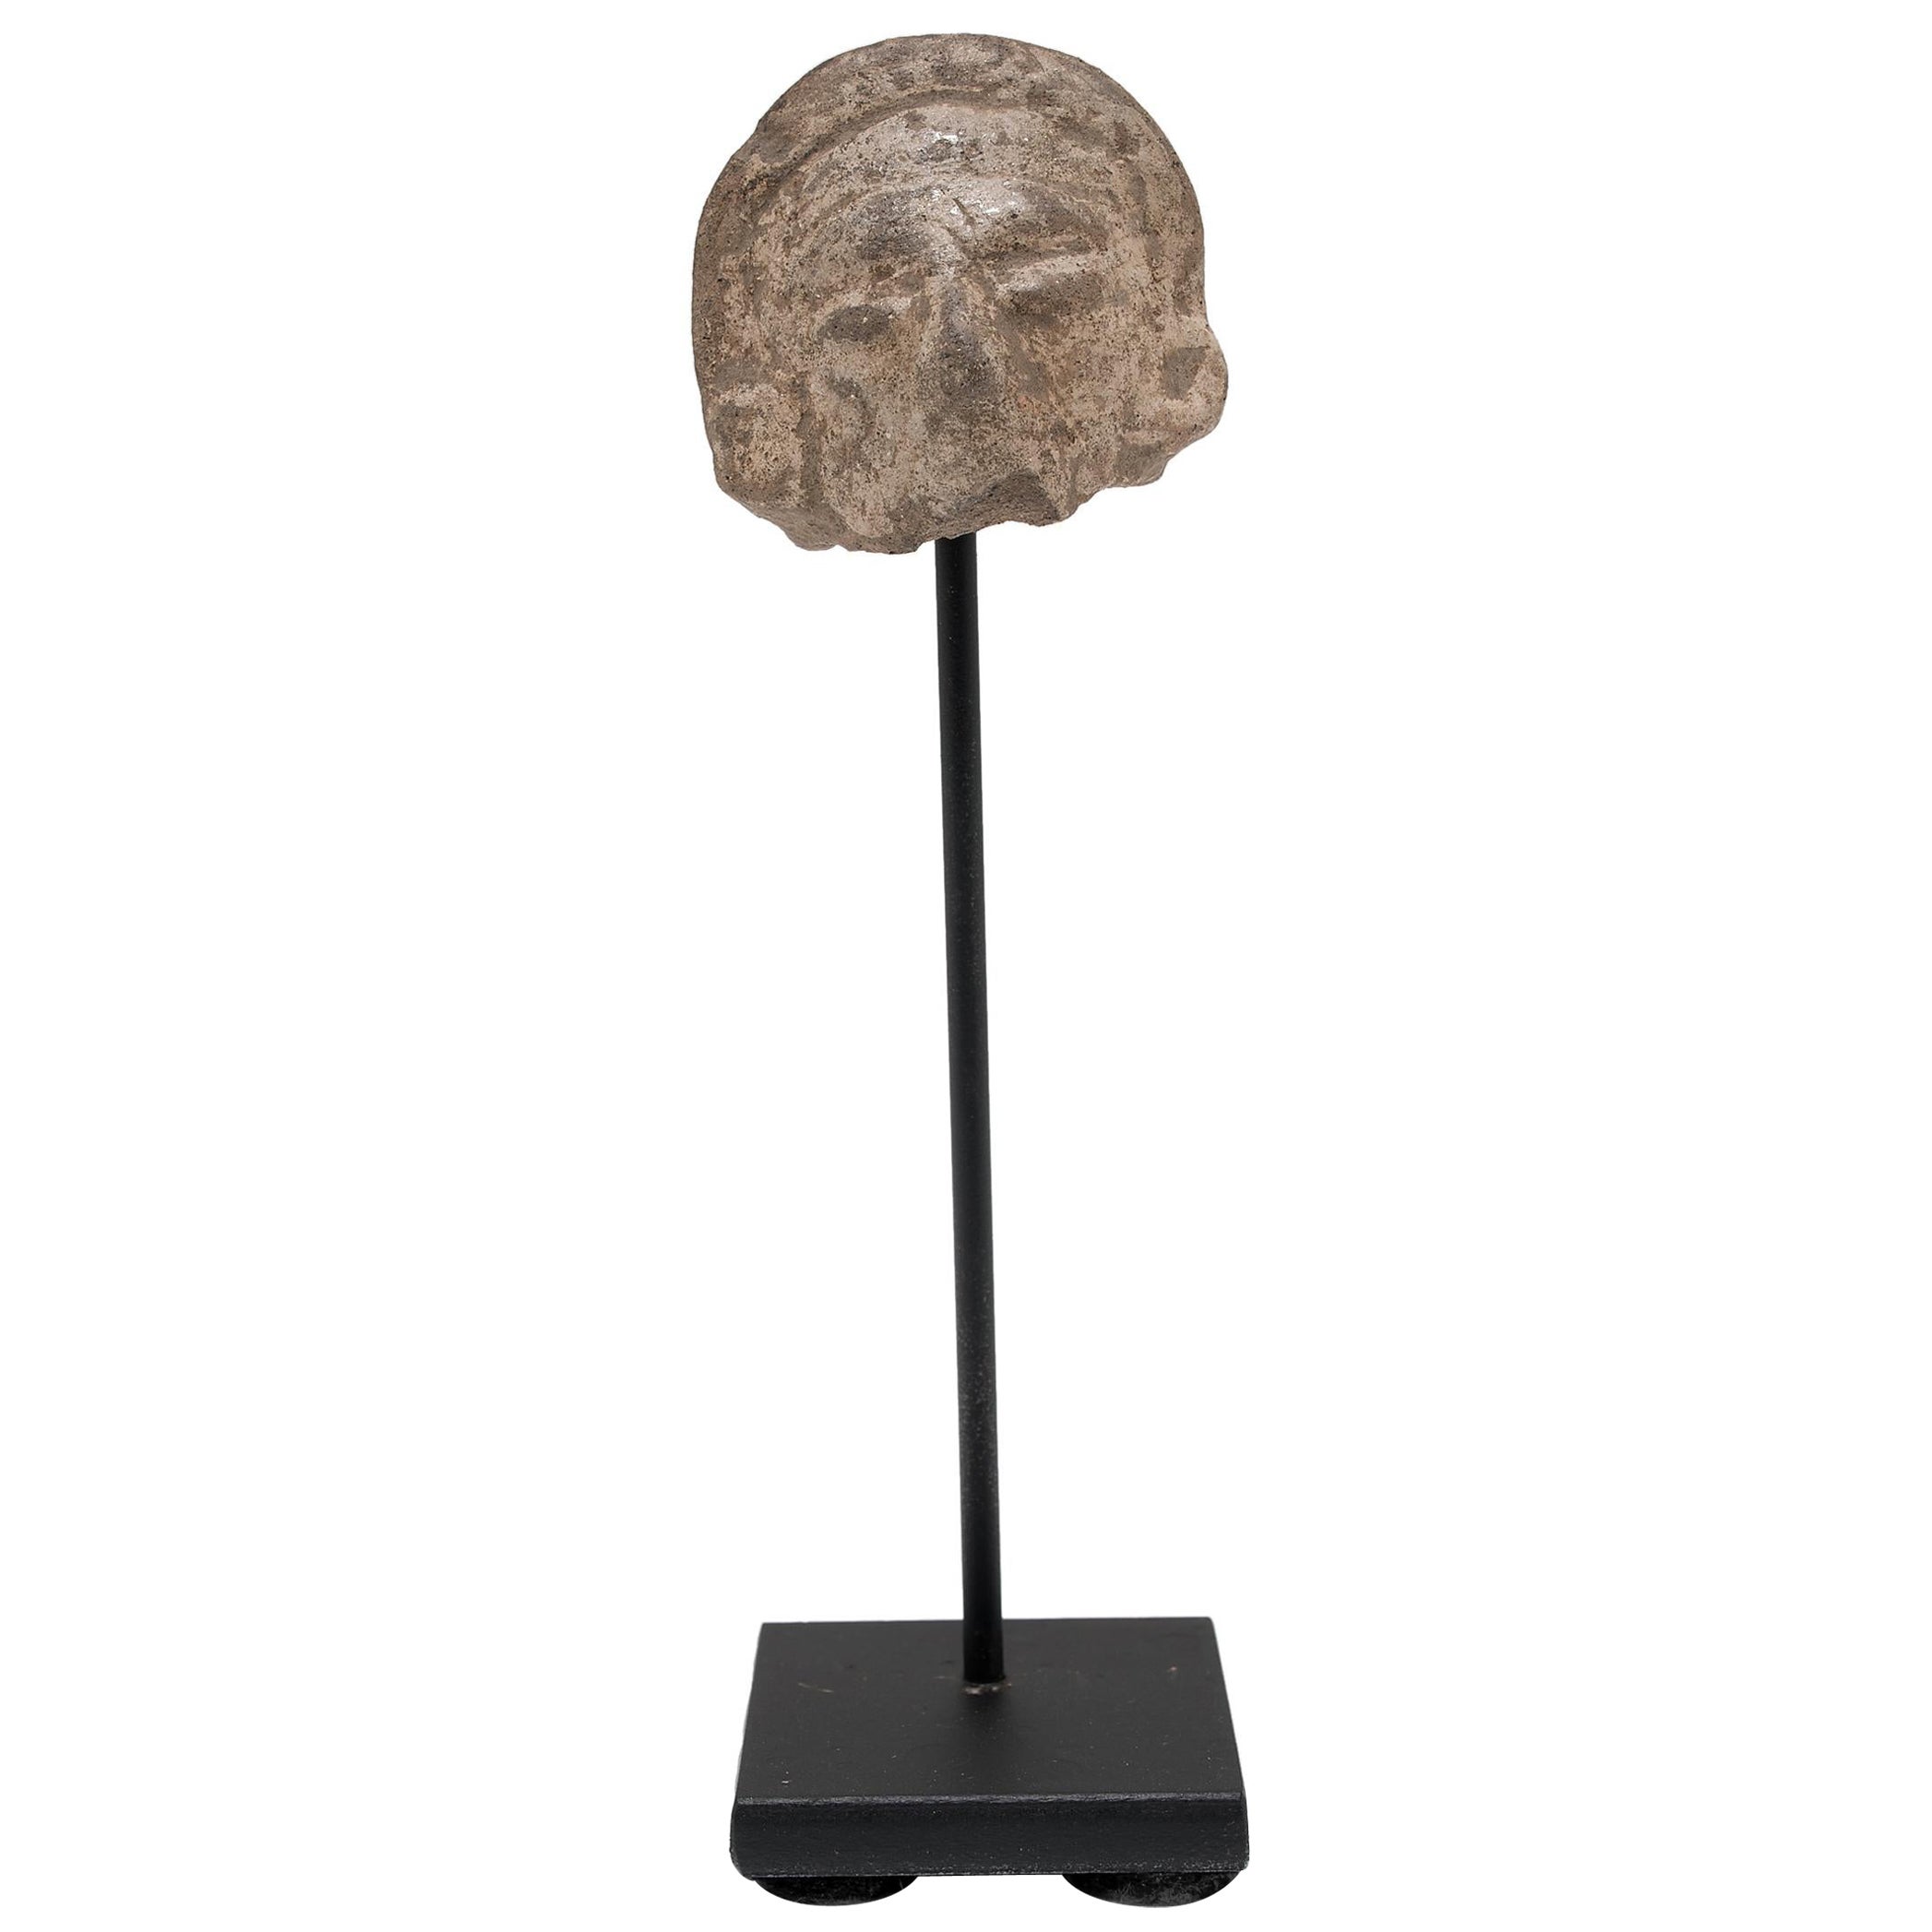 Pre-Columbian Ceramic Head Fragment